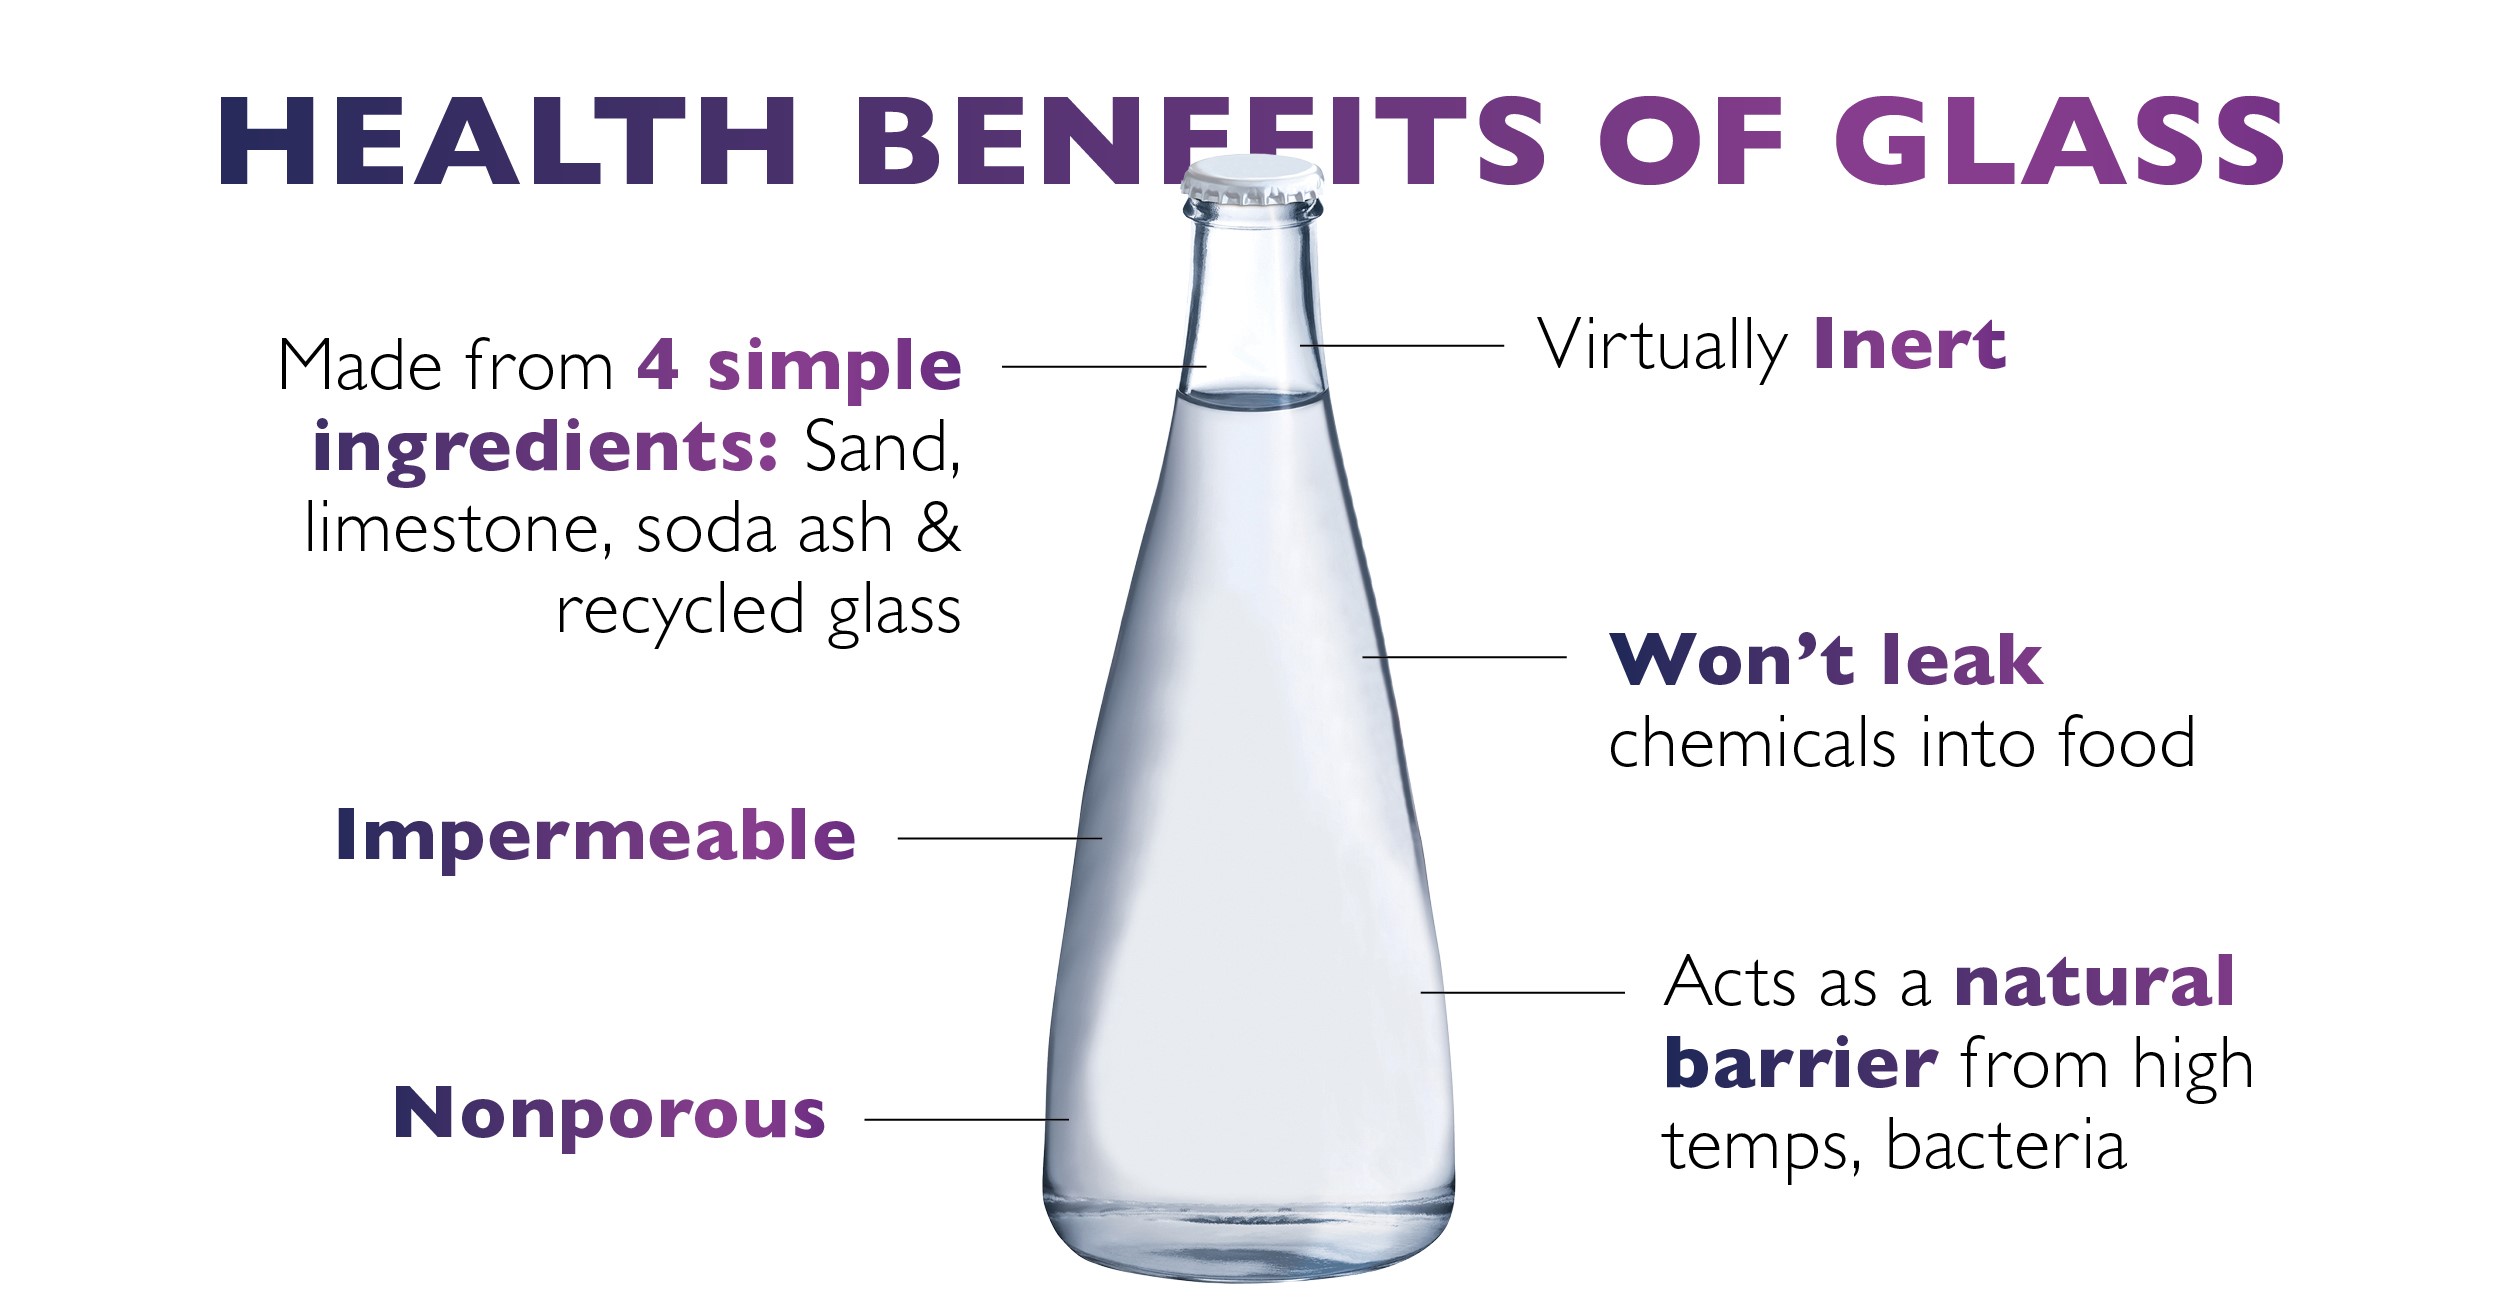 Health Benefits of Glass